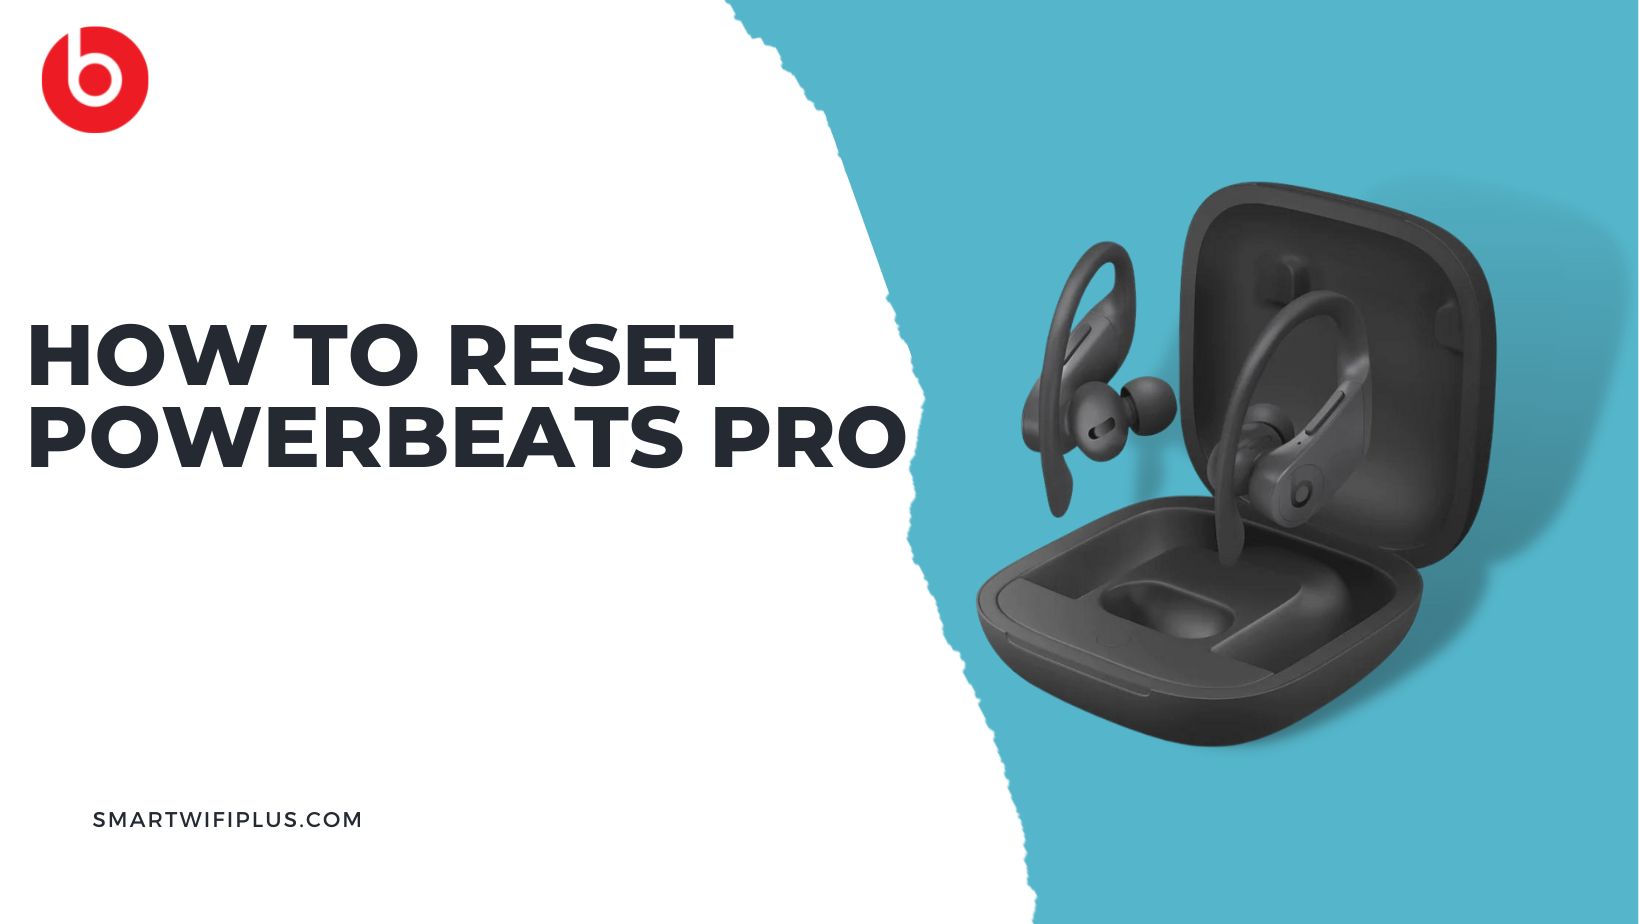 How to Reset Powerbeats pro?